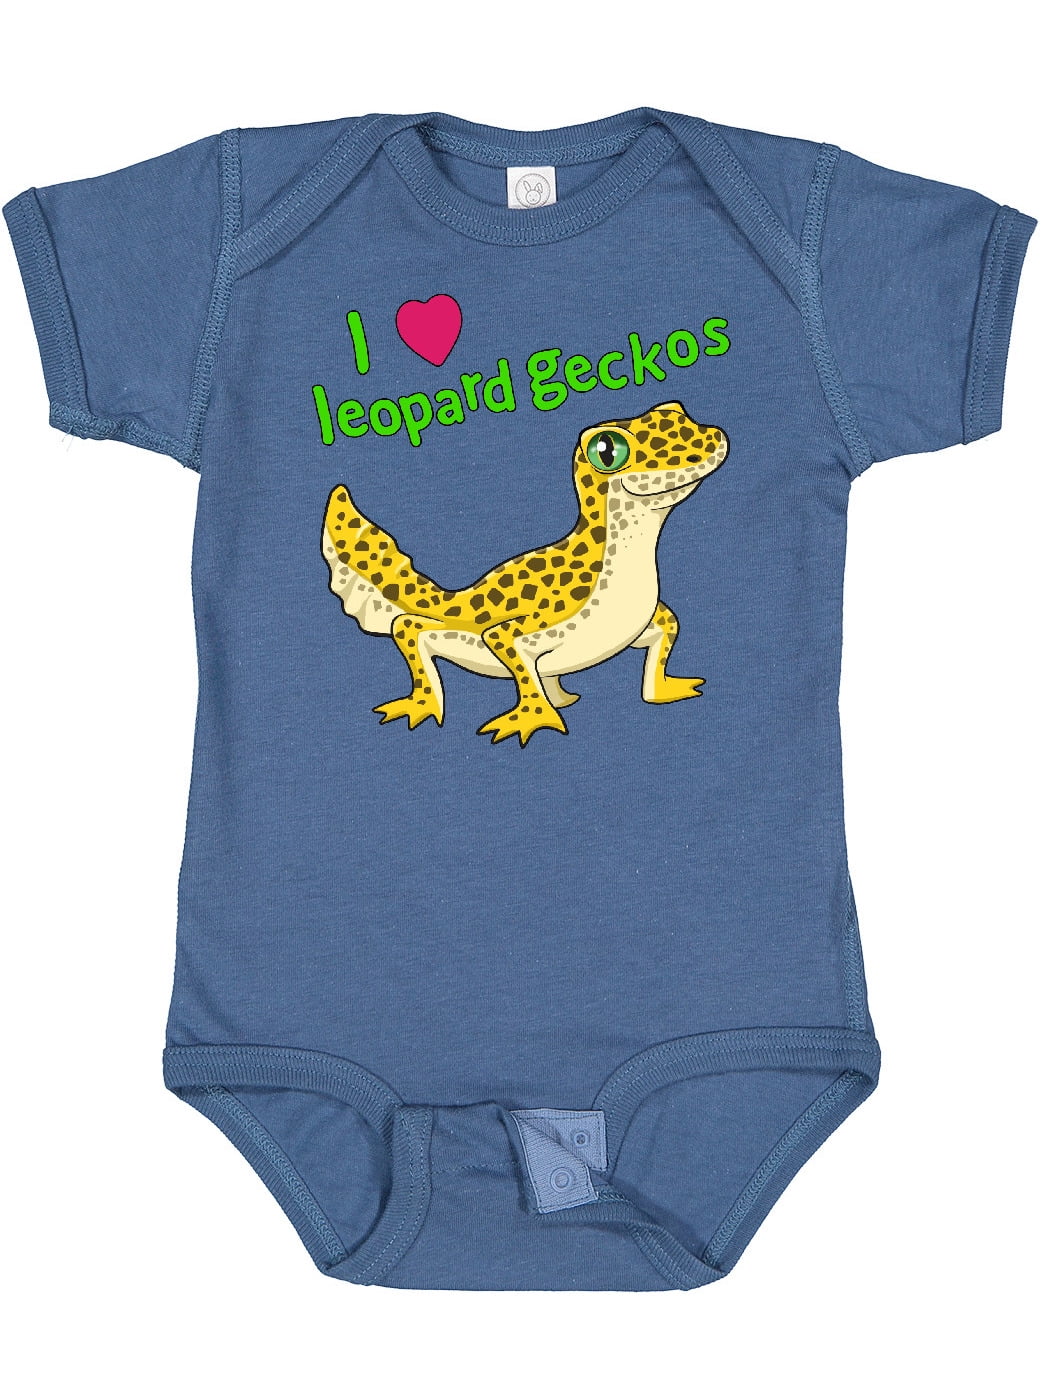 Green Gecko Short Sleeve Shirt Baby Boy Toddlers 